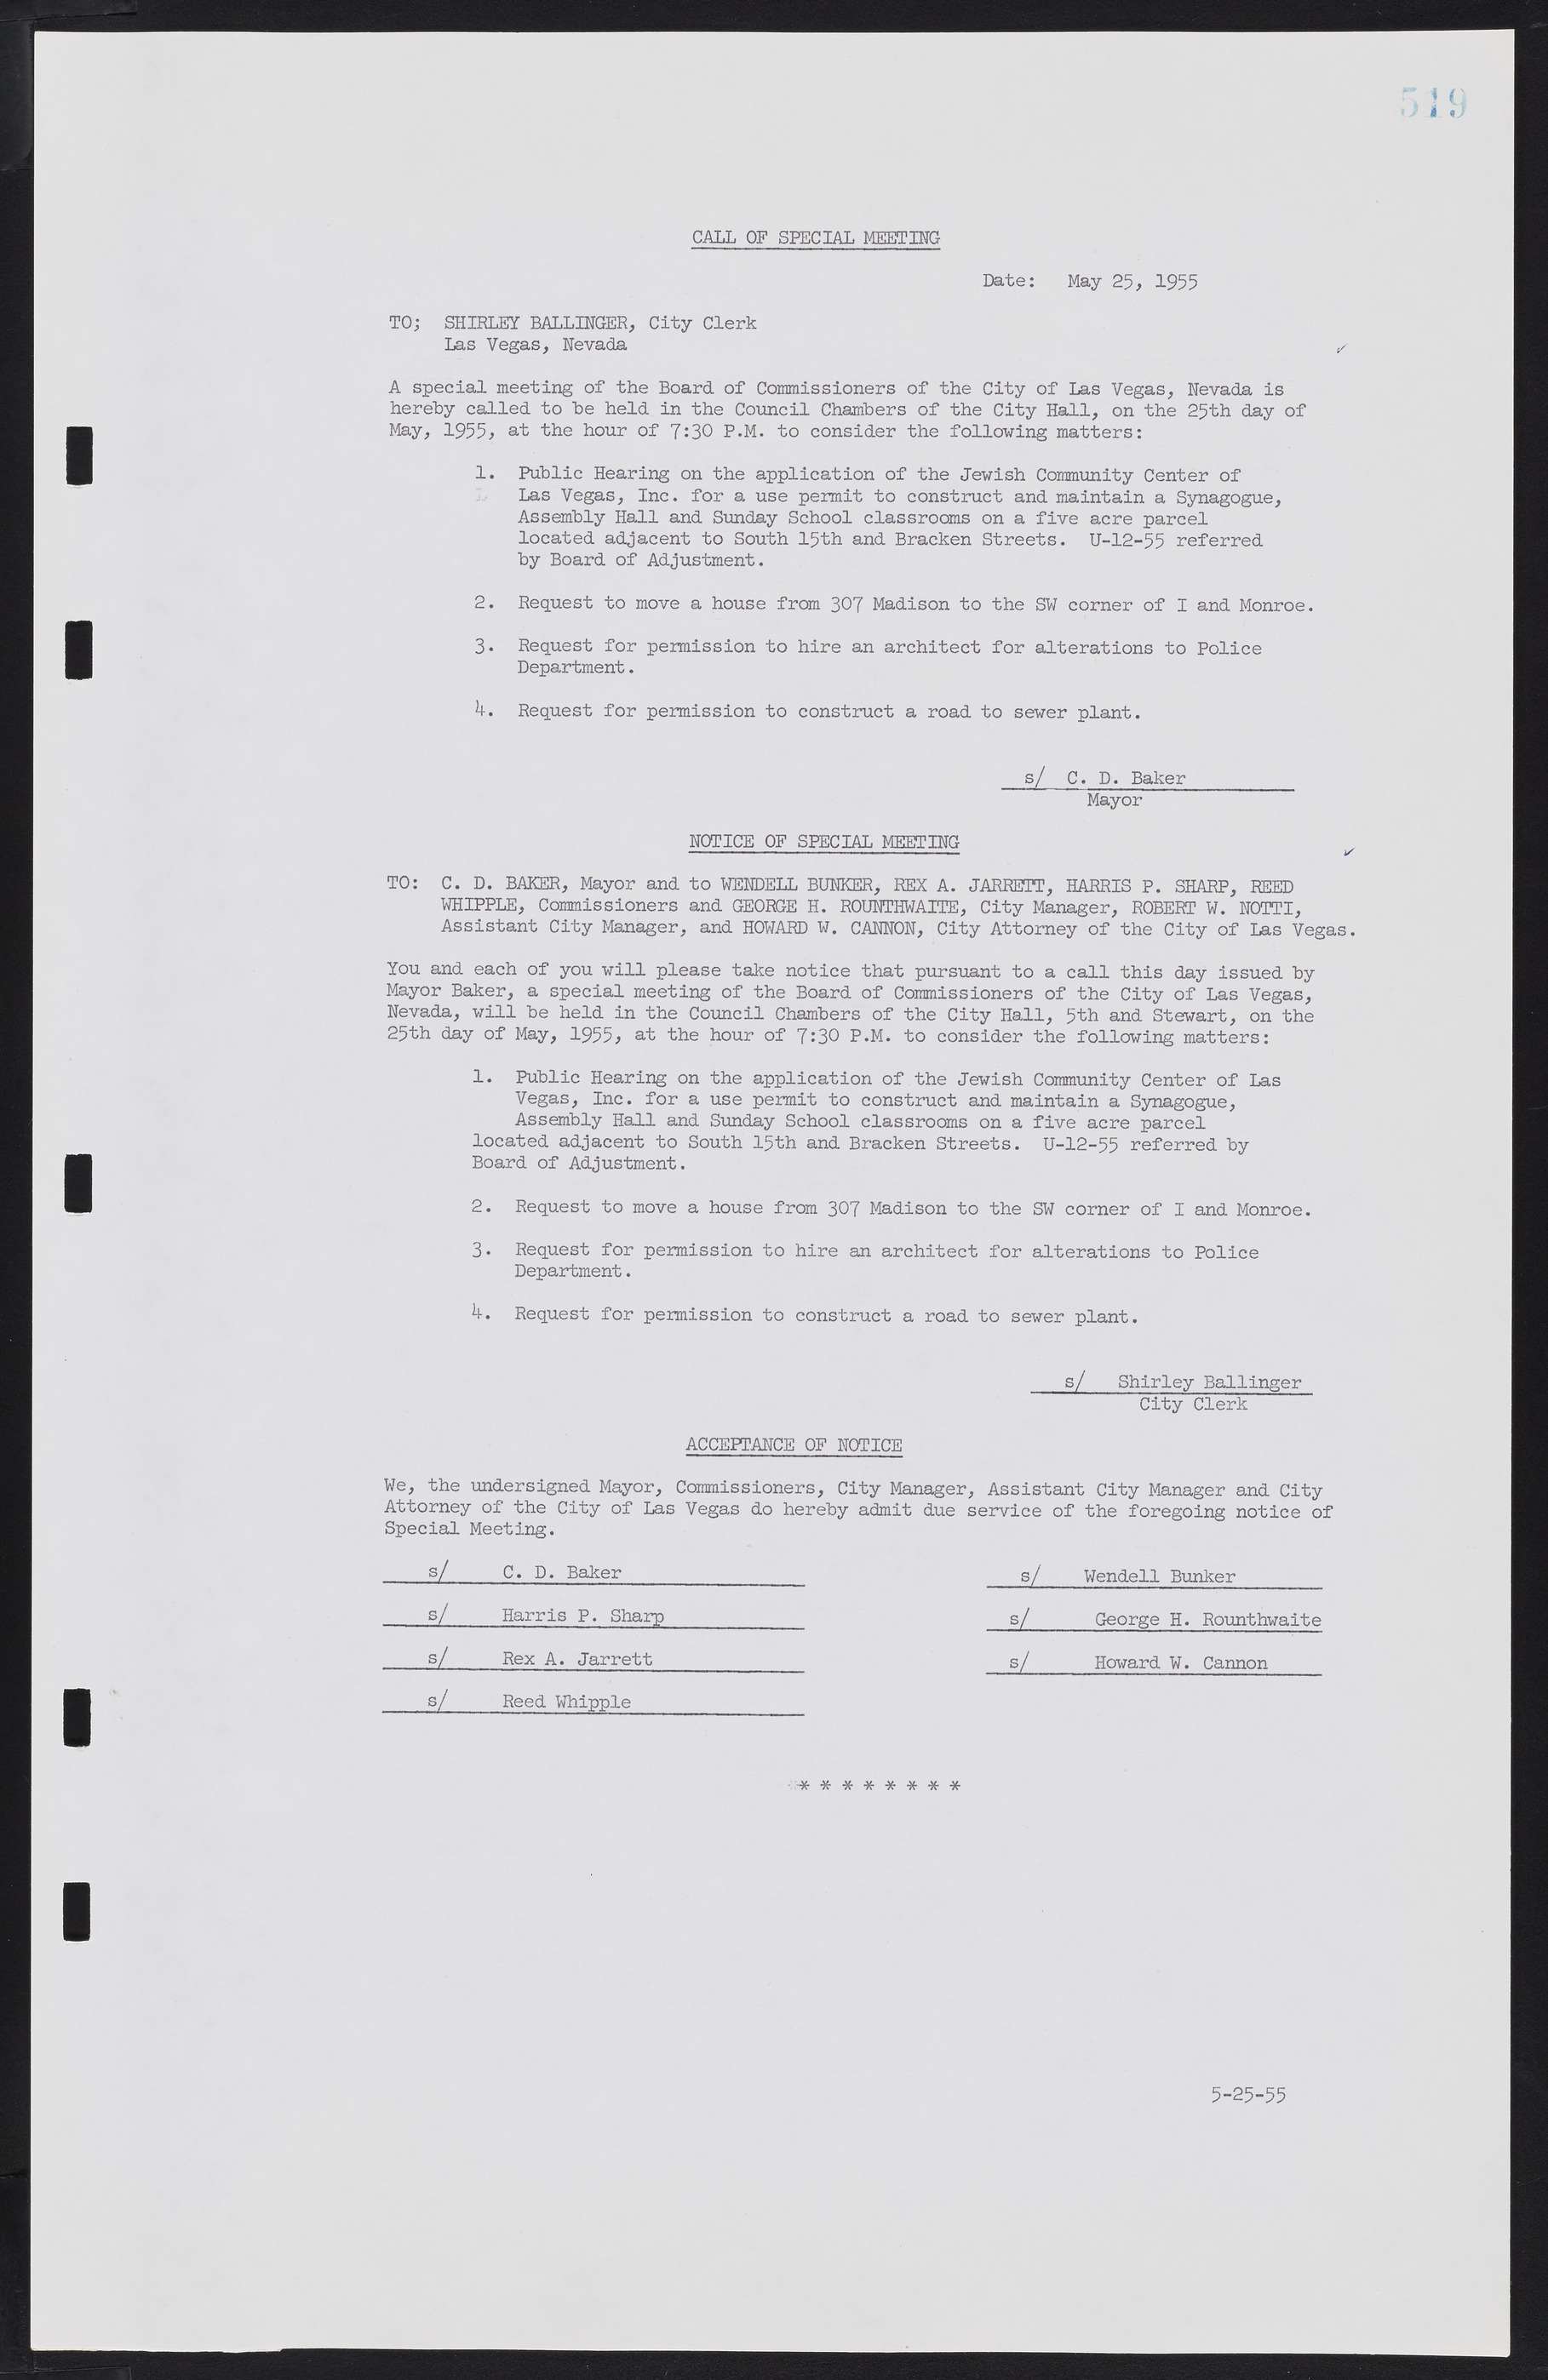 Las Vegas City Commission Minutes, February 17, 1954 to September 21, 1955, lvc000009-525